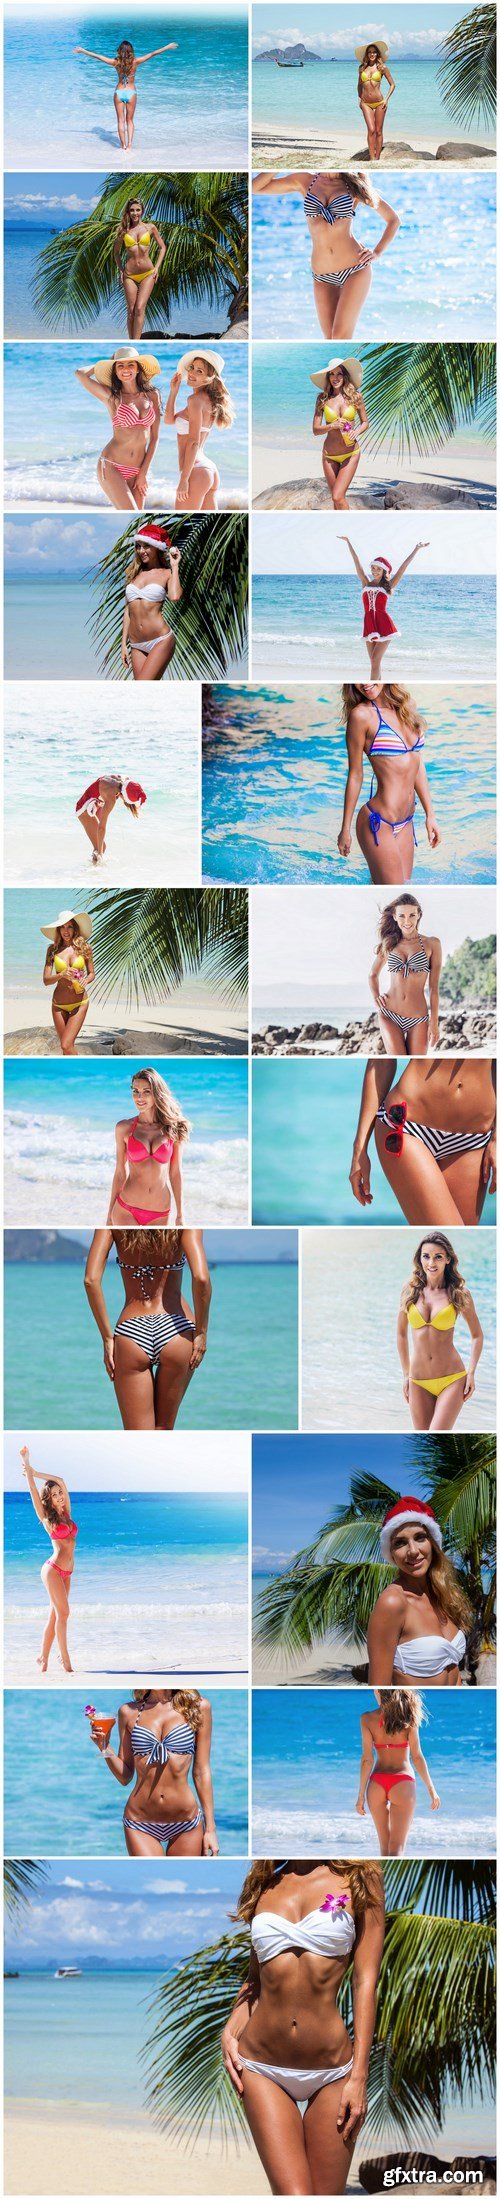 The beautiful girl on the paradise beach - 21xUHQ JPEG Photo Stock